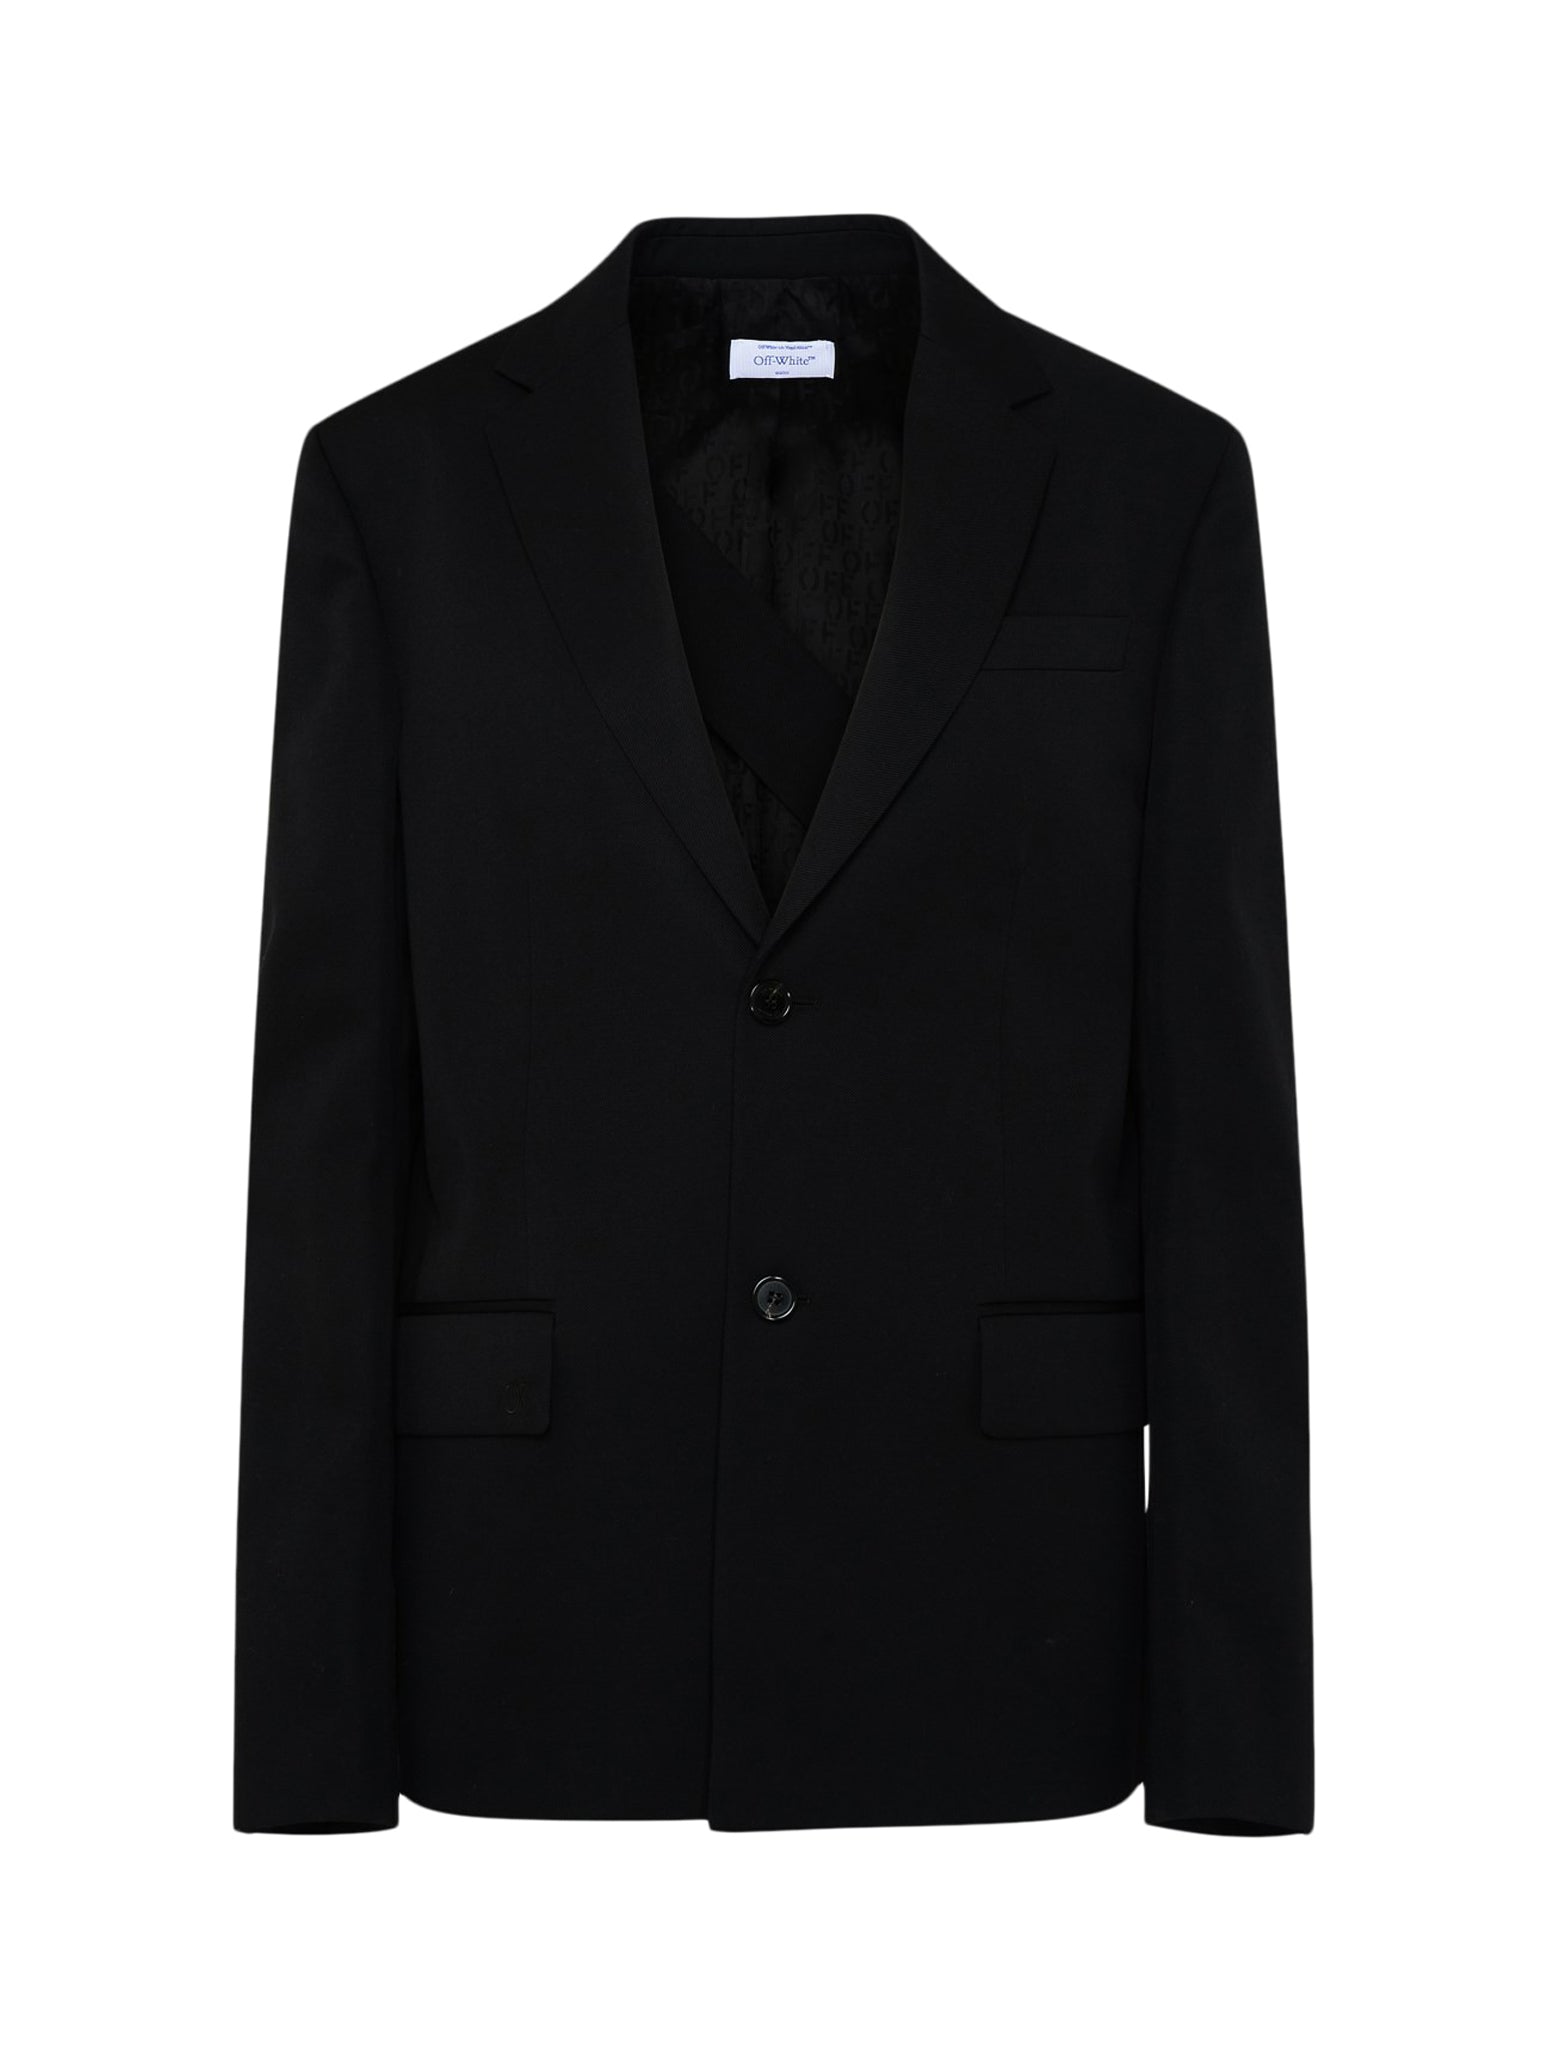 black wool blazer jacket